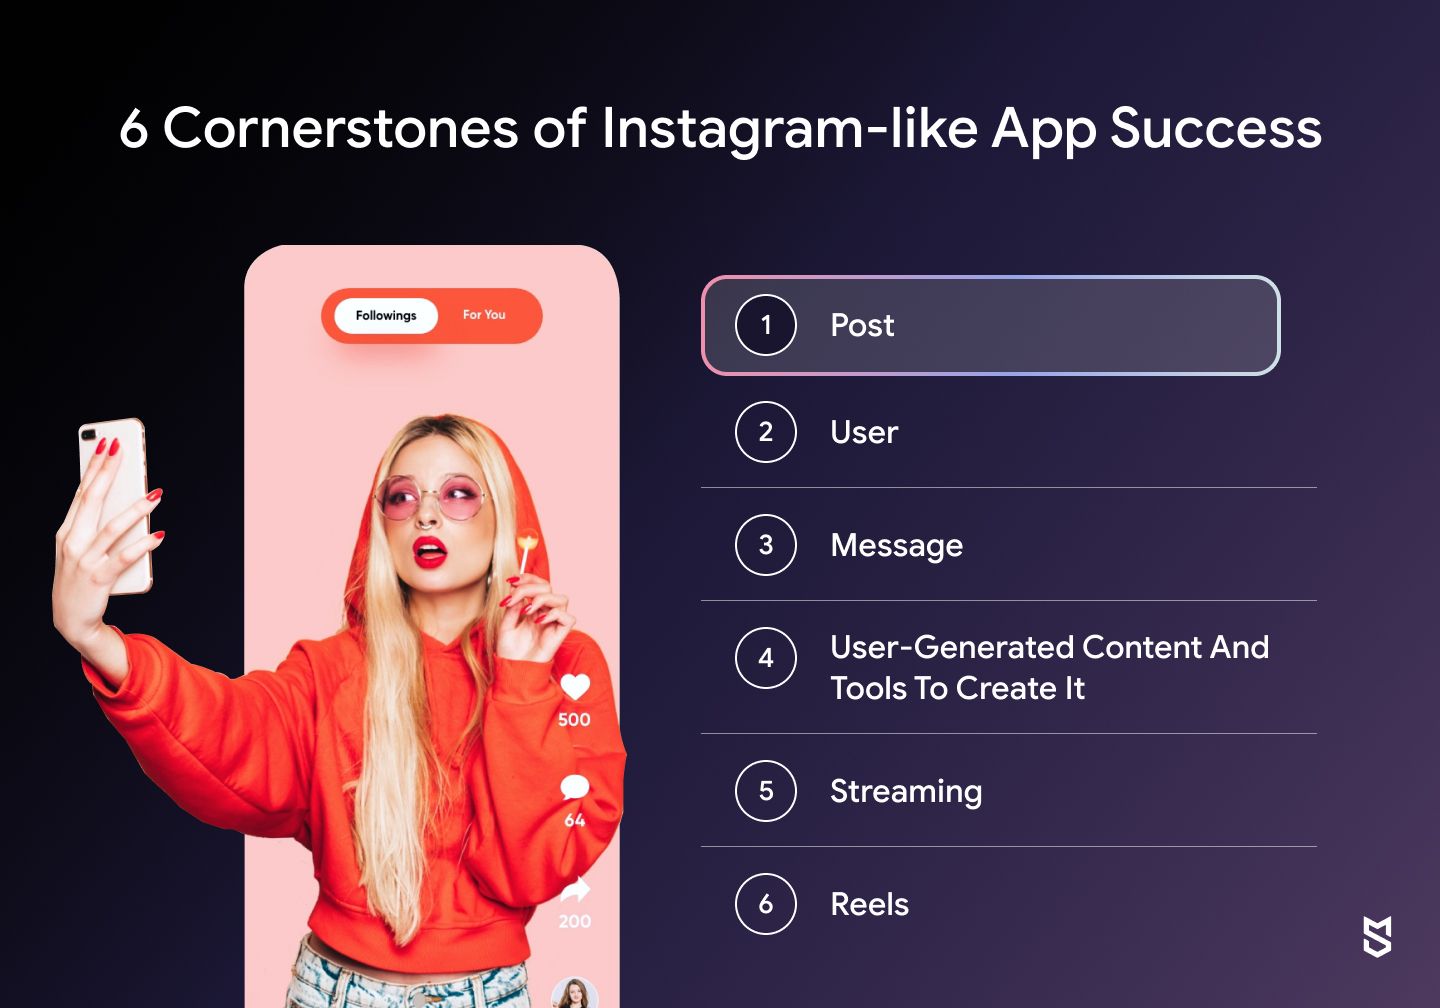 6 cornerstones of Instagram-like app success